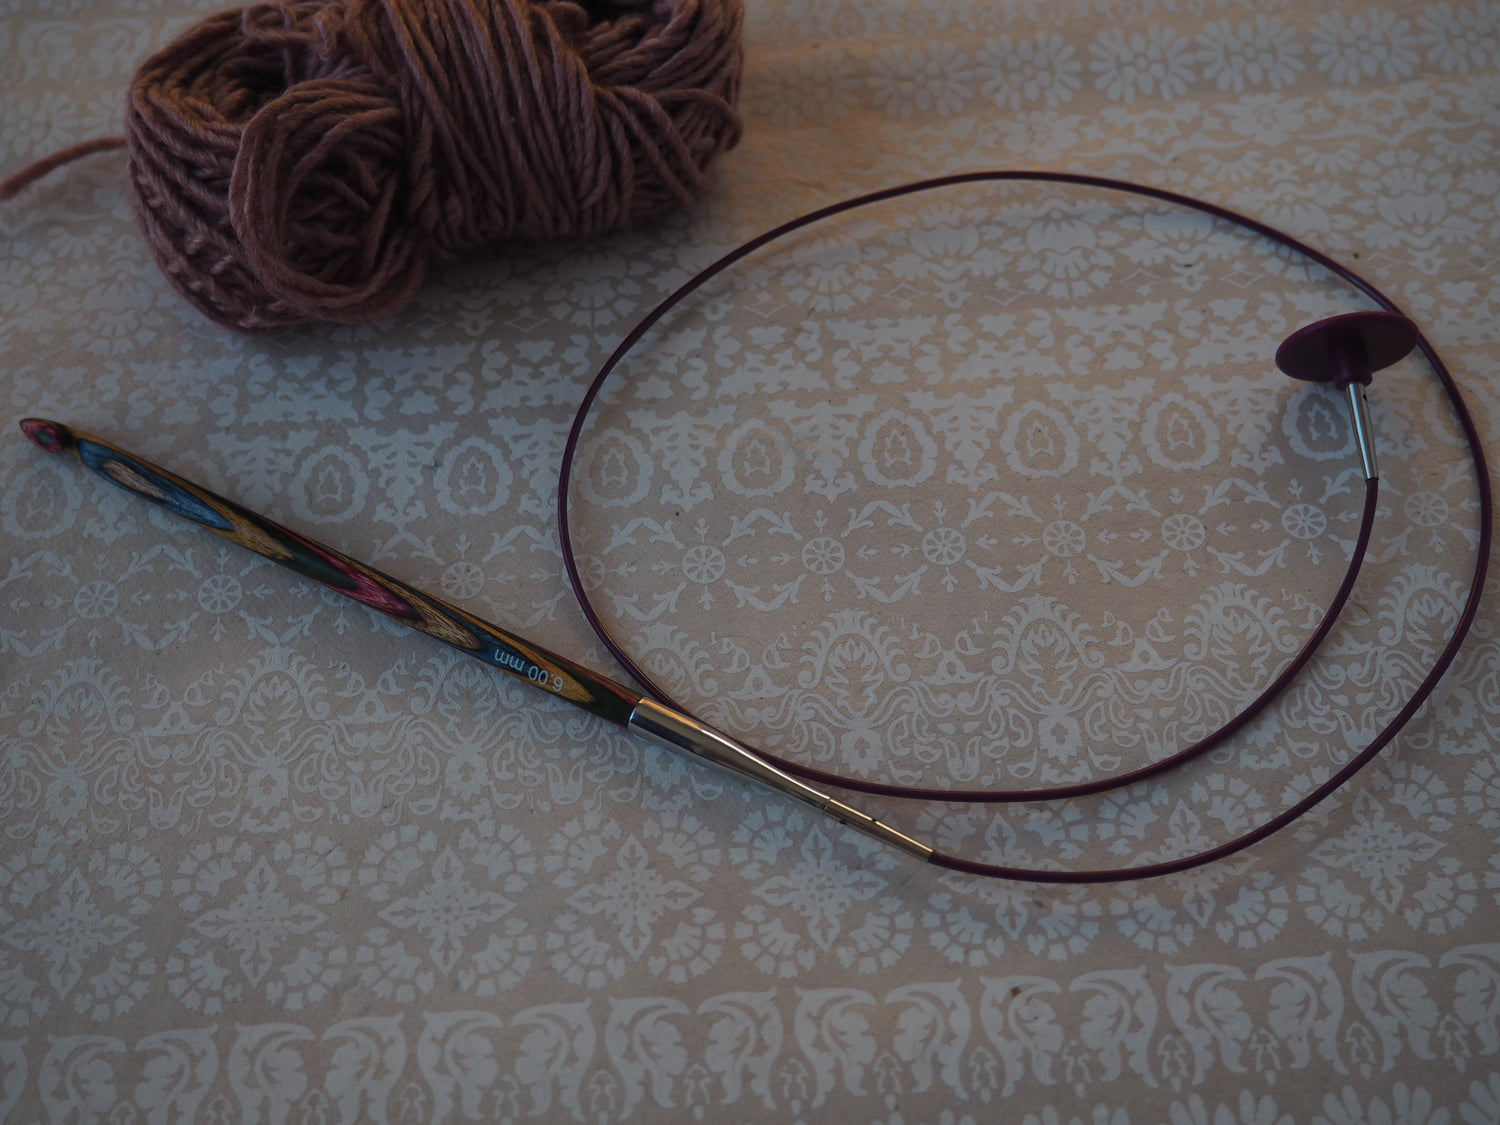 a tunisian crochet hook and yarn